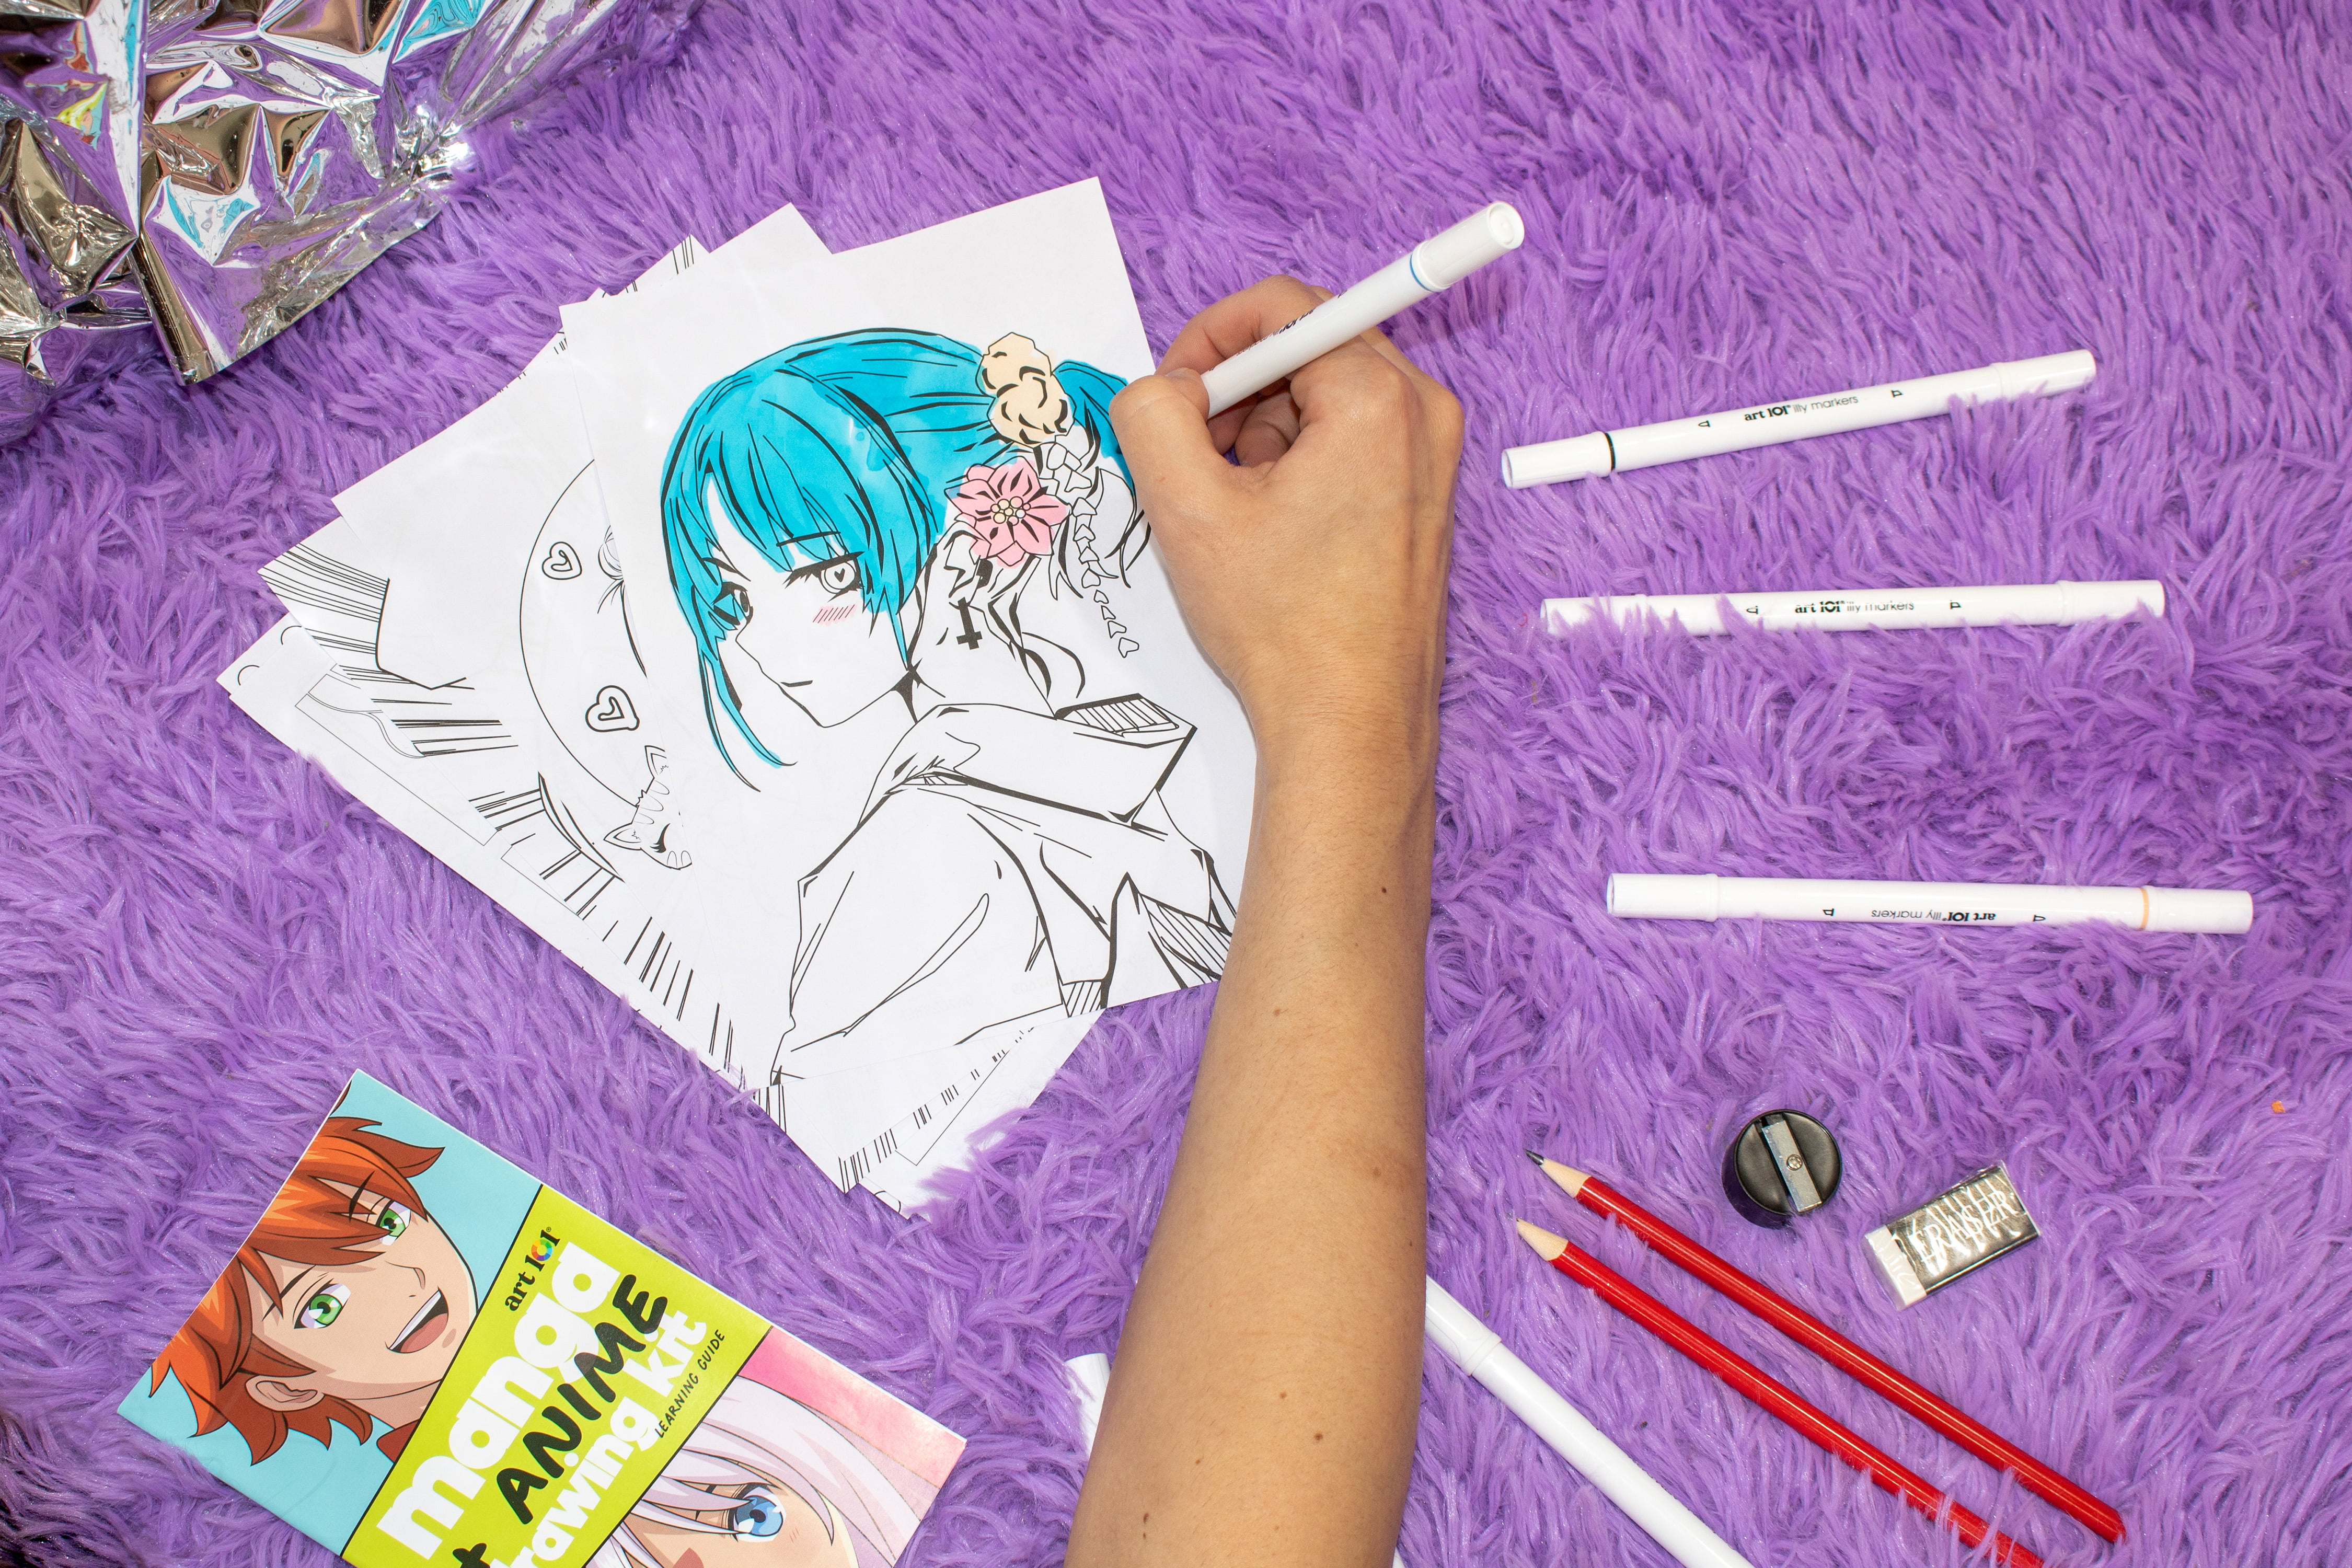 Pin by B. Loren on How To: Art Help  Manga artist, Manga, Artist supplies